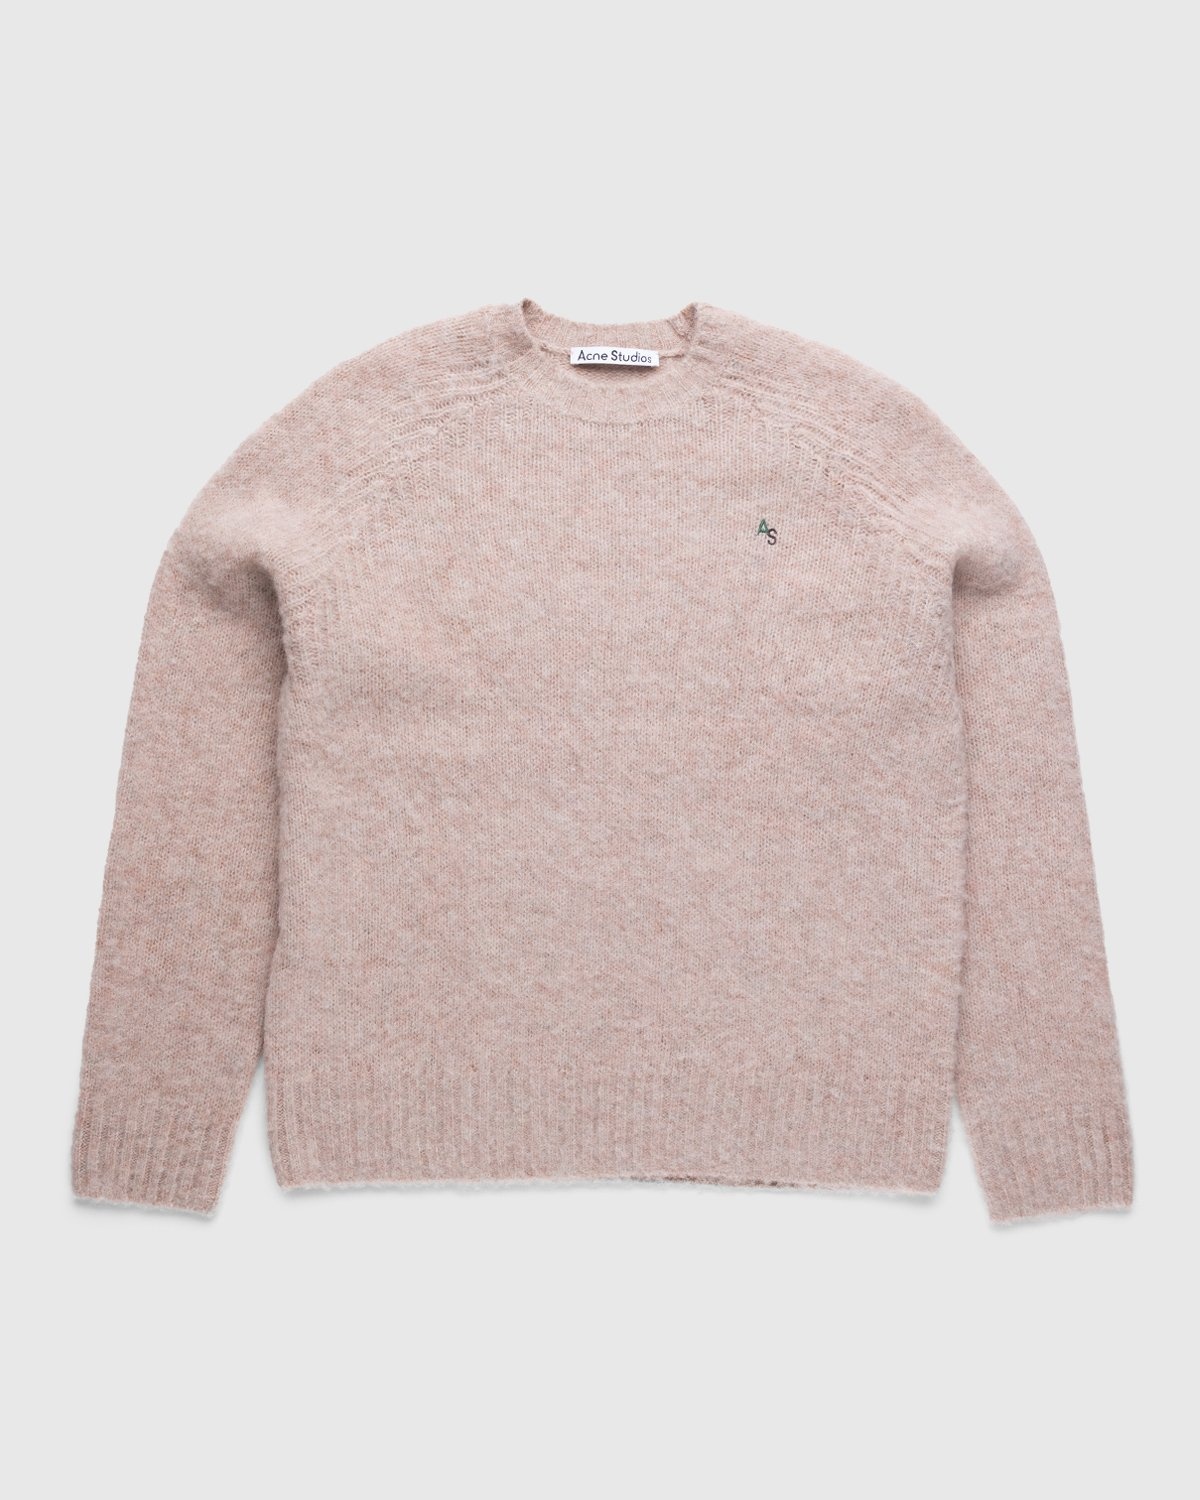 Acne Studios – Knit Sweater Pastel Pink - Knitwear - Pink - Image 1